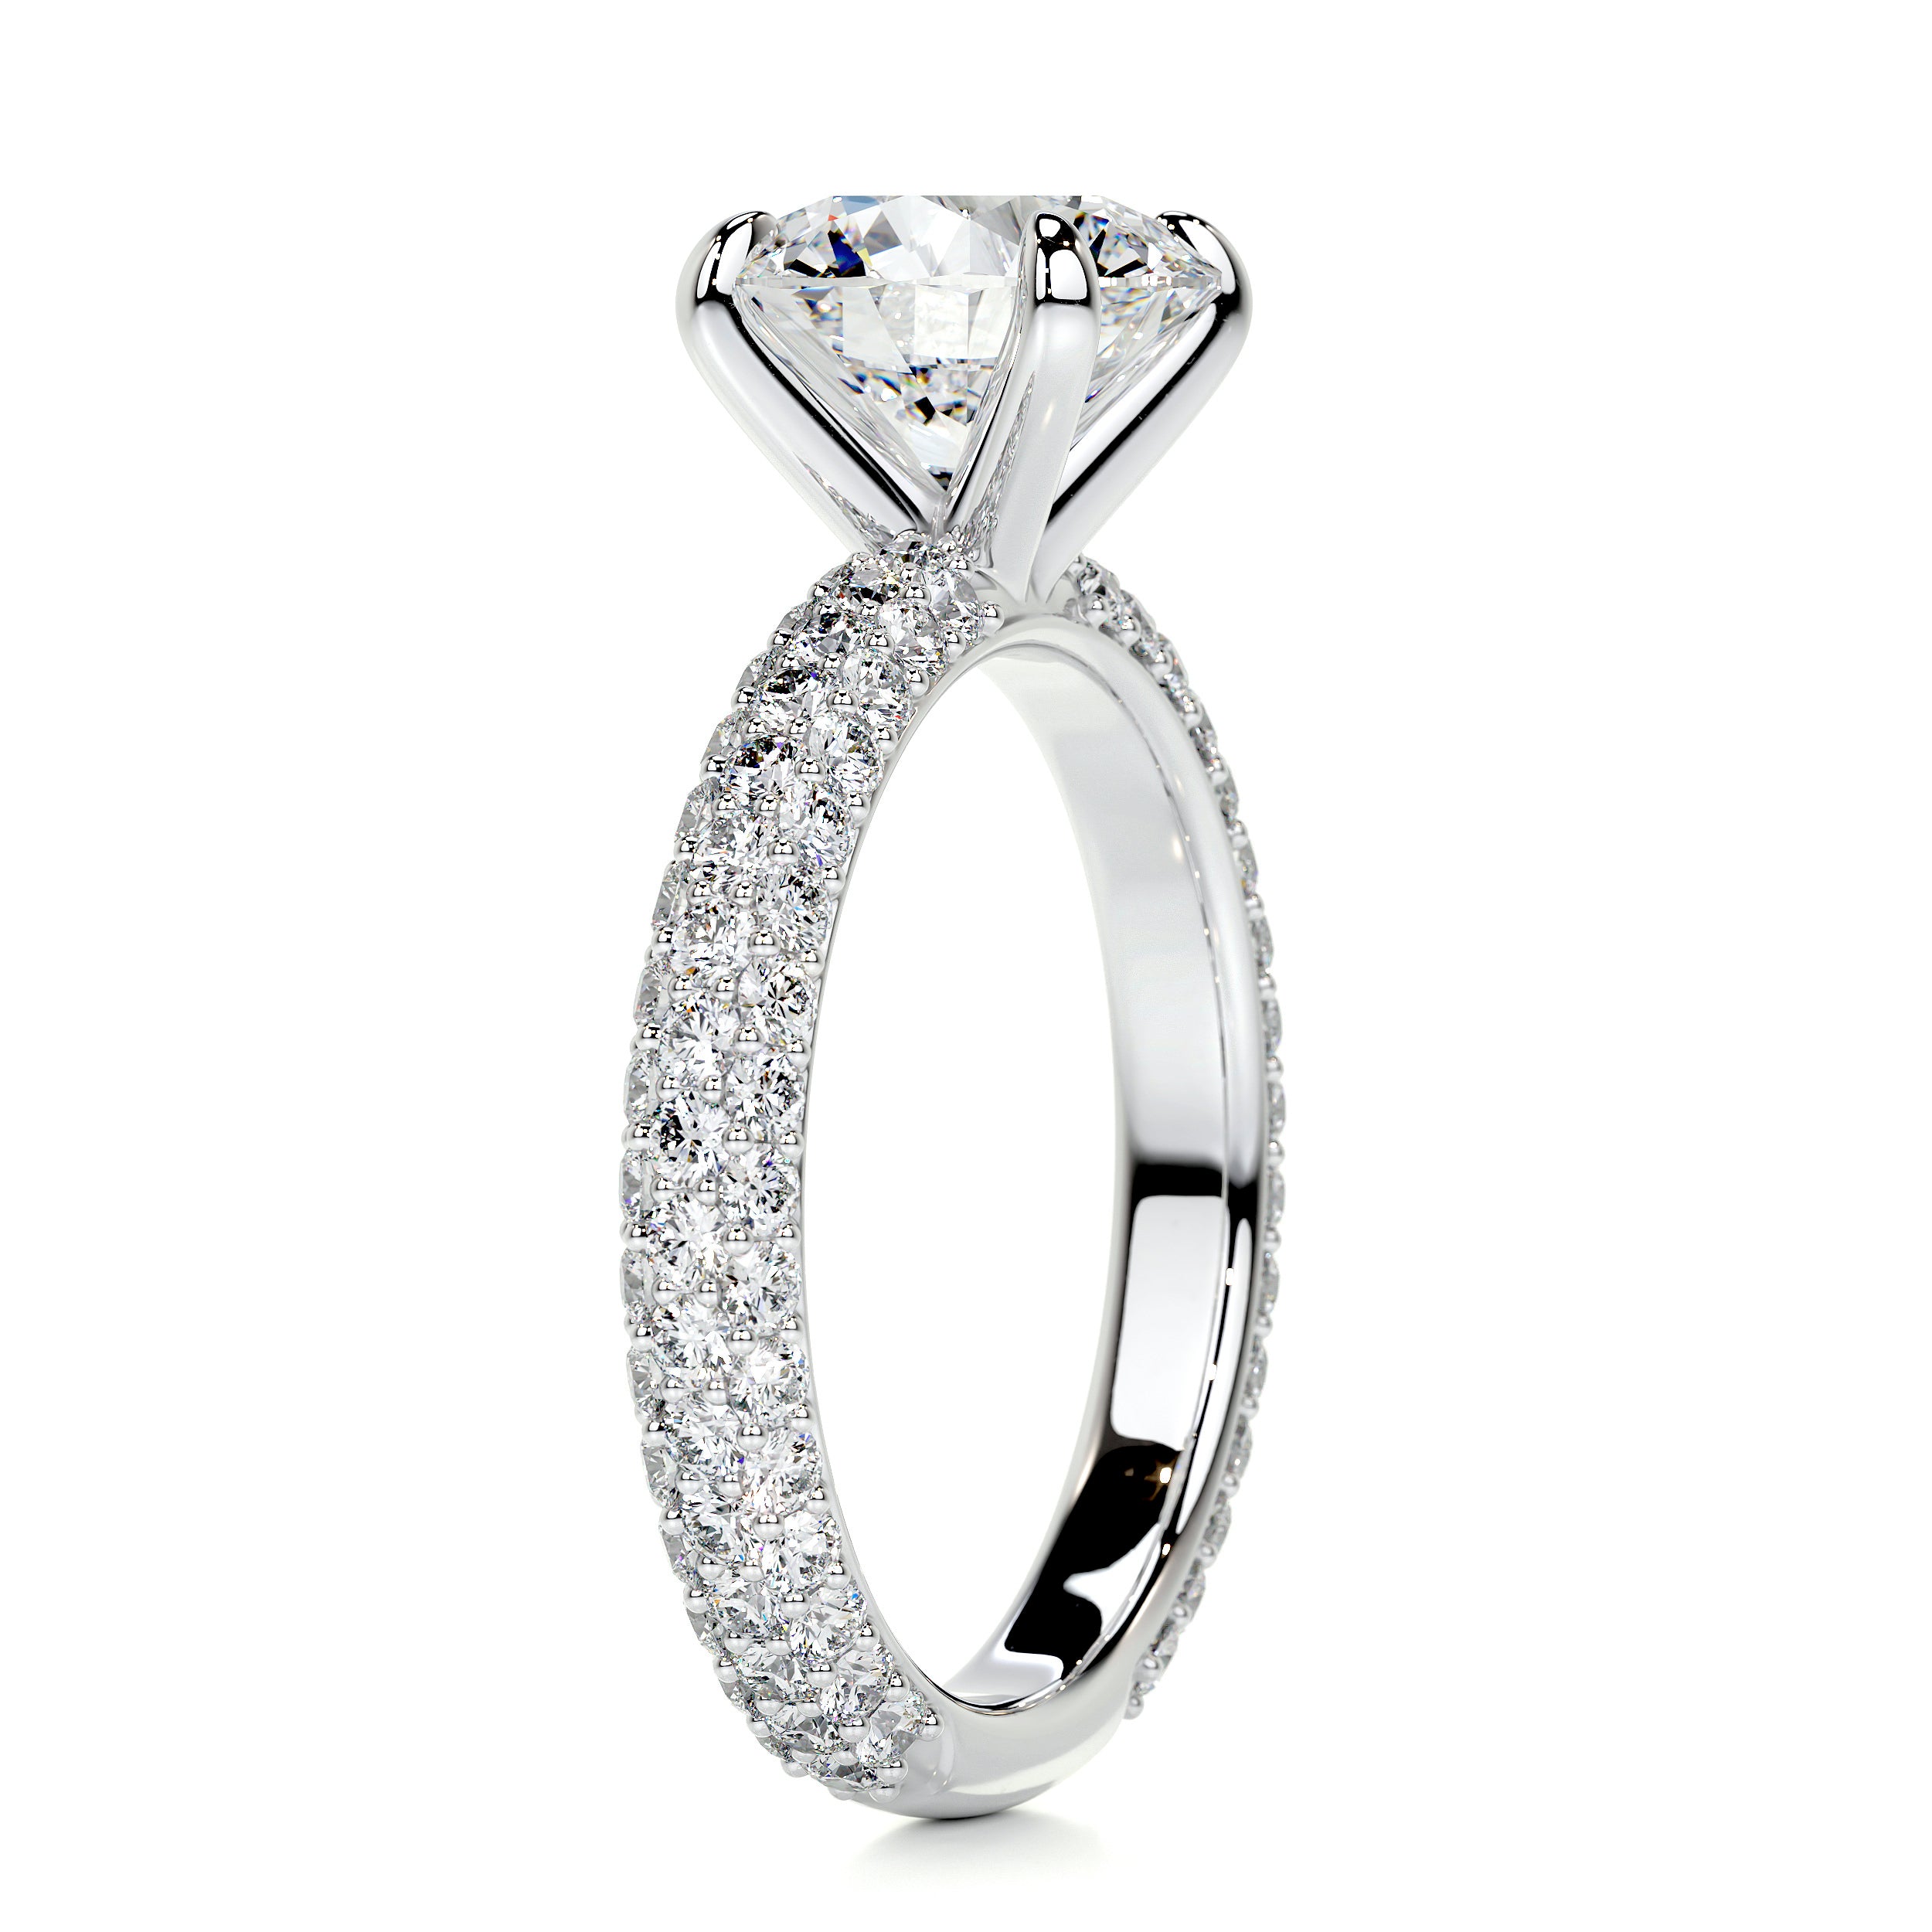 Charlotte Diamond Engagement Ring   (2.5 Carat) -Platinum